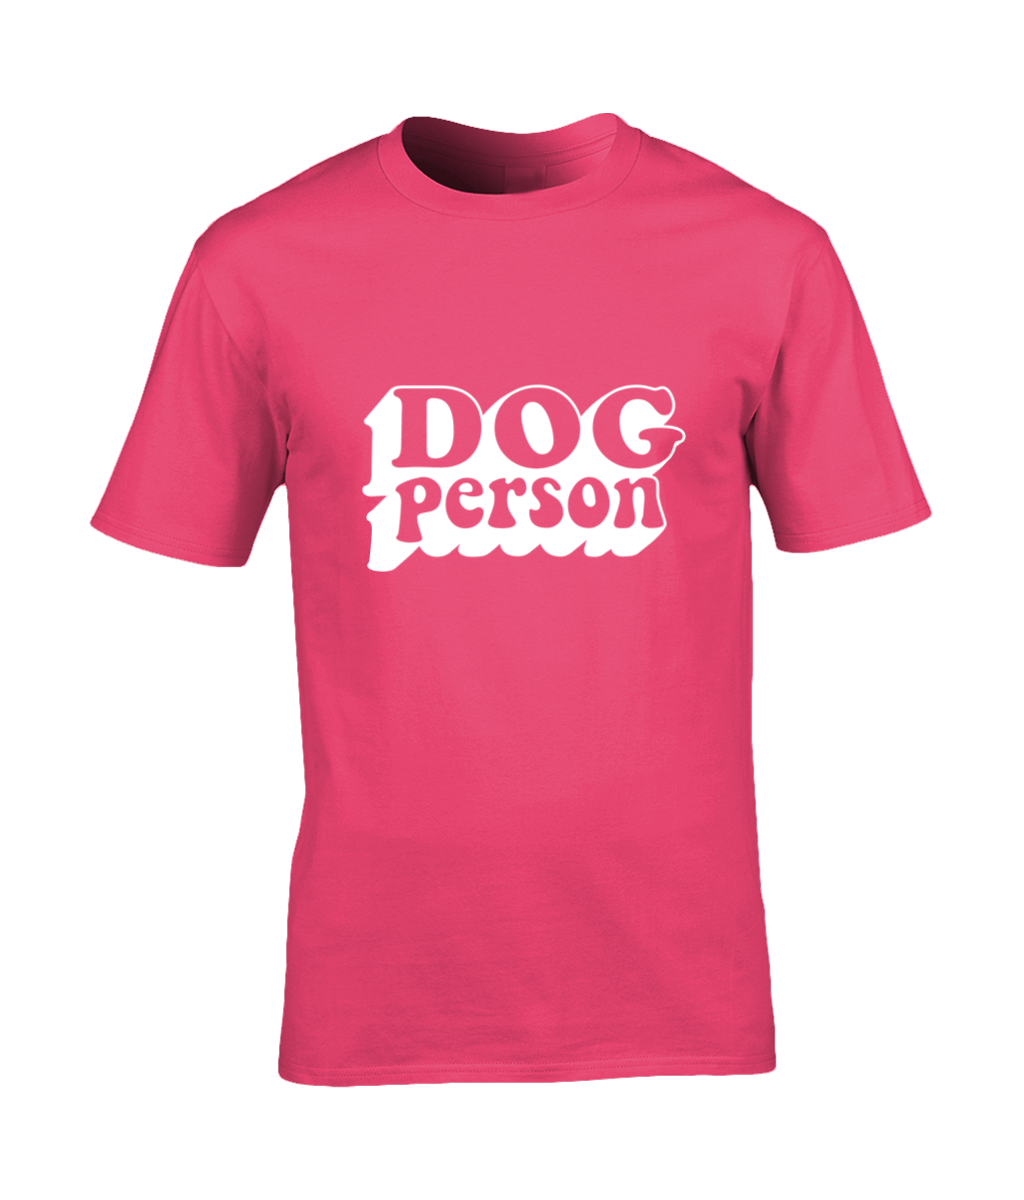 BMDR "Dog Person" T-Shirt - Unisex